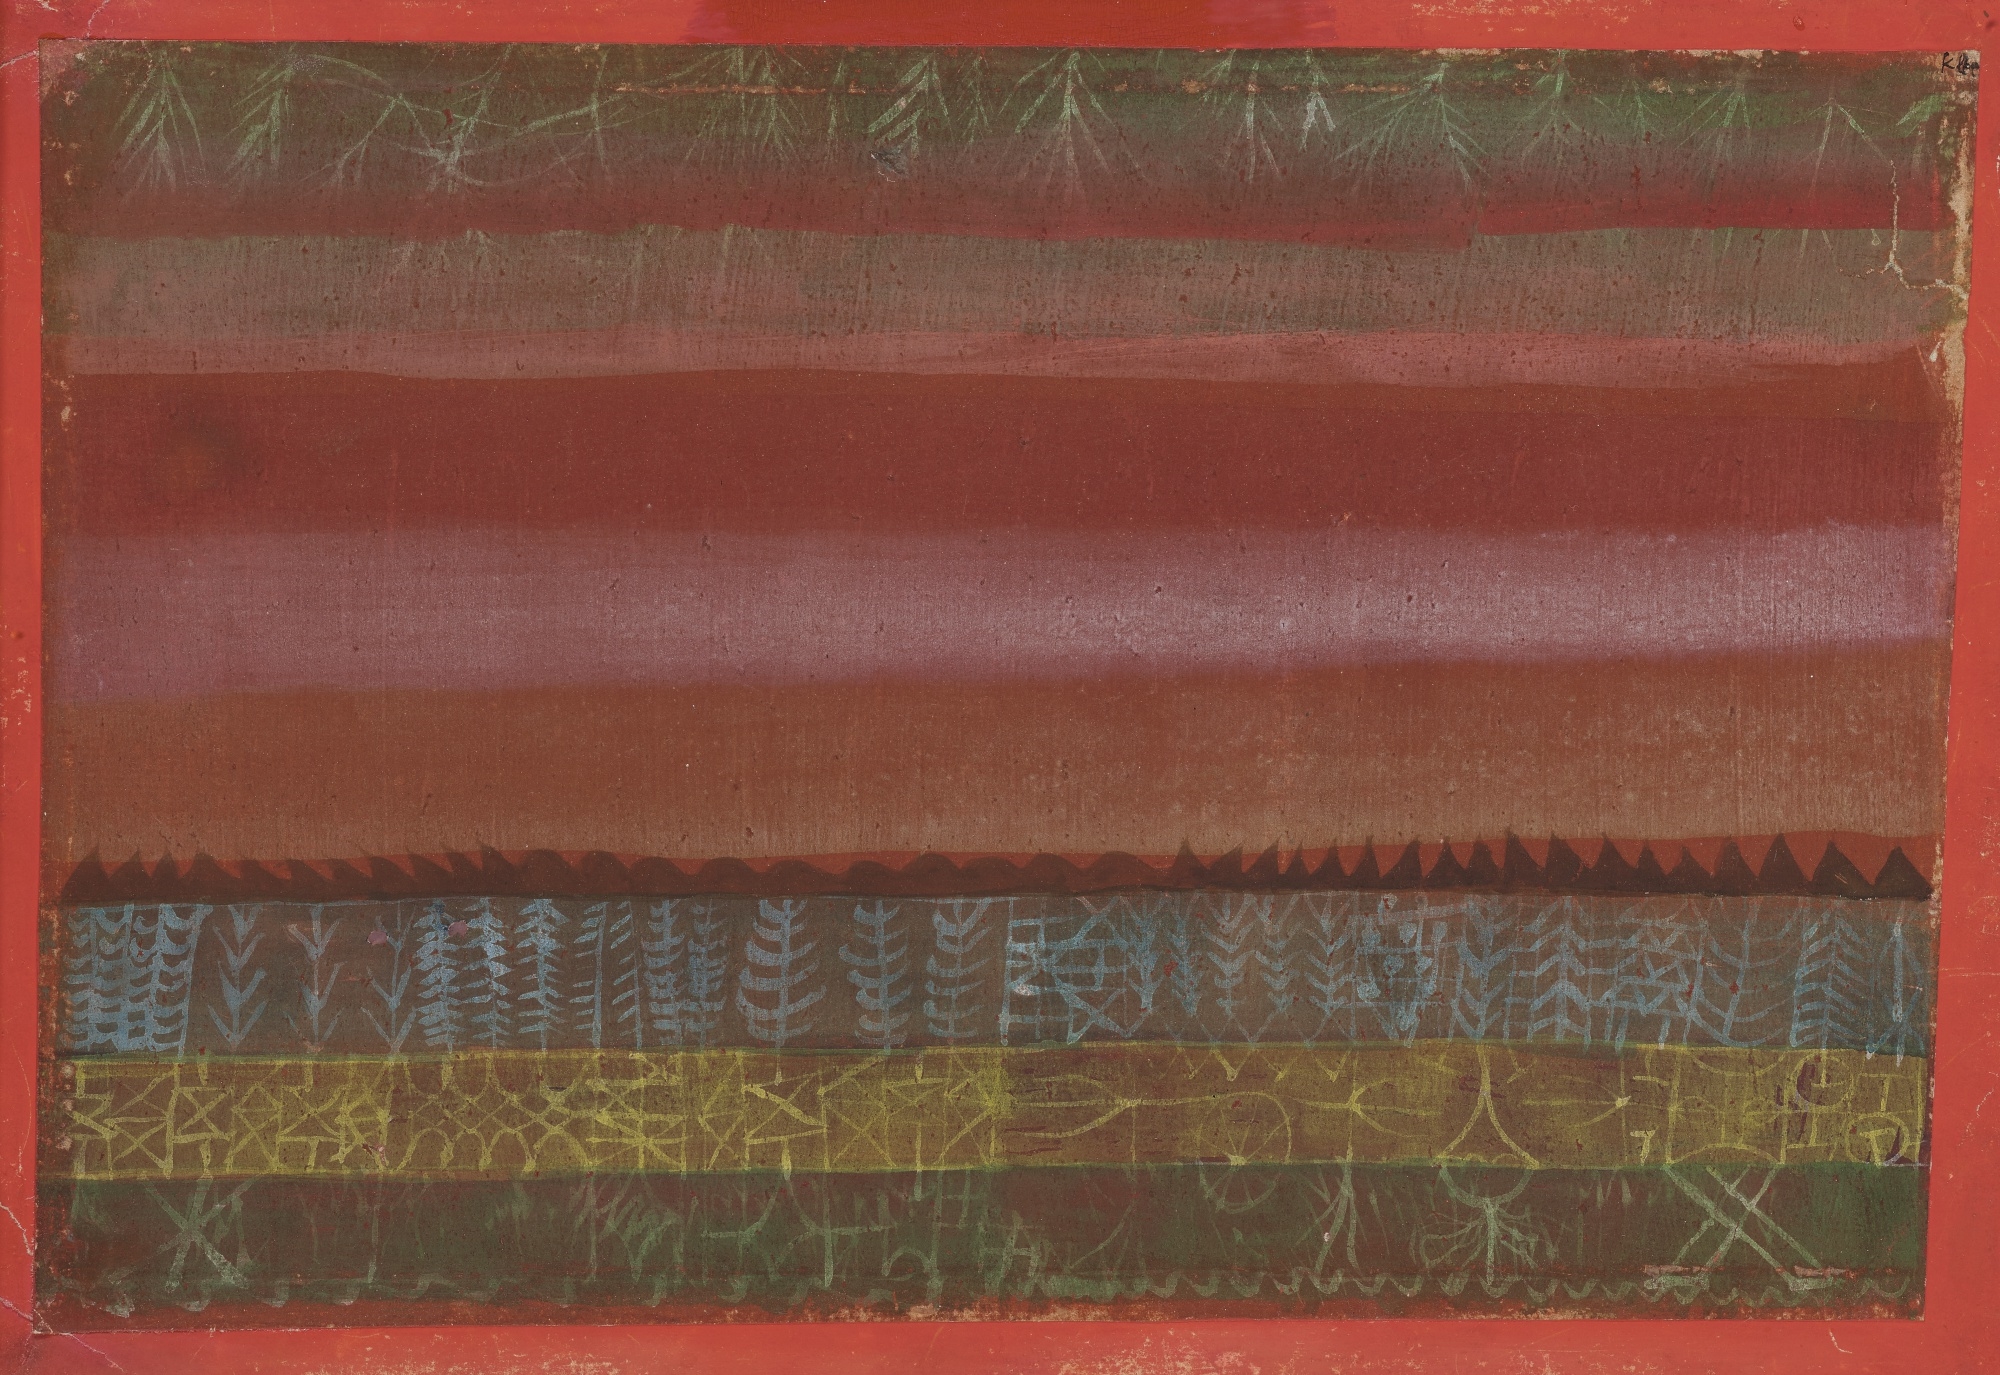 Ebene Landschaft (Flat Landscape) by Paul Klee, 1924